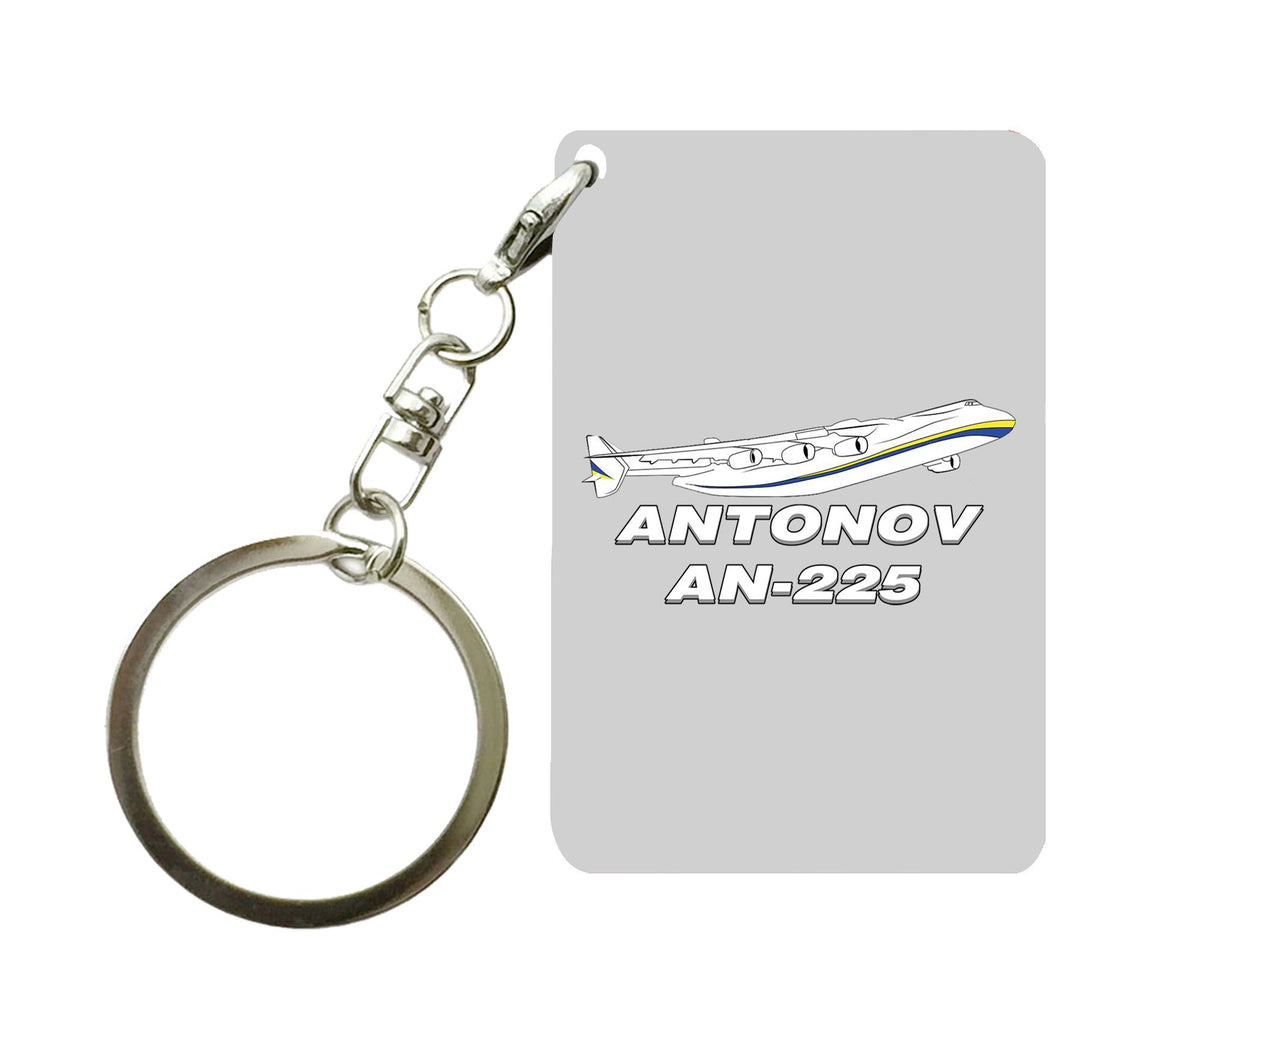 Antonov AN-225 (27) Designed Key Chains